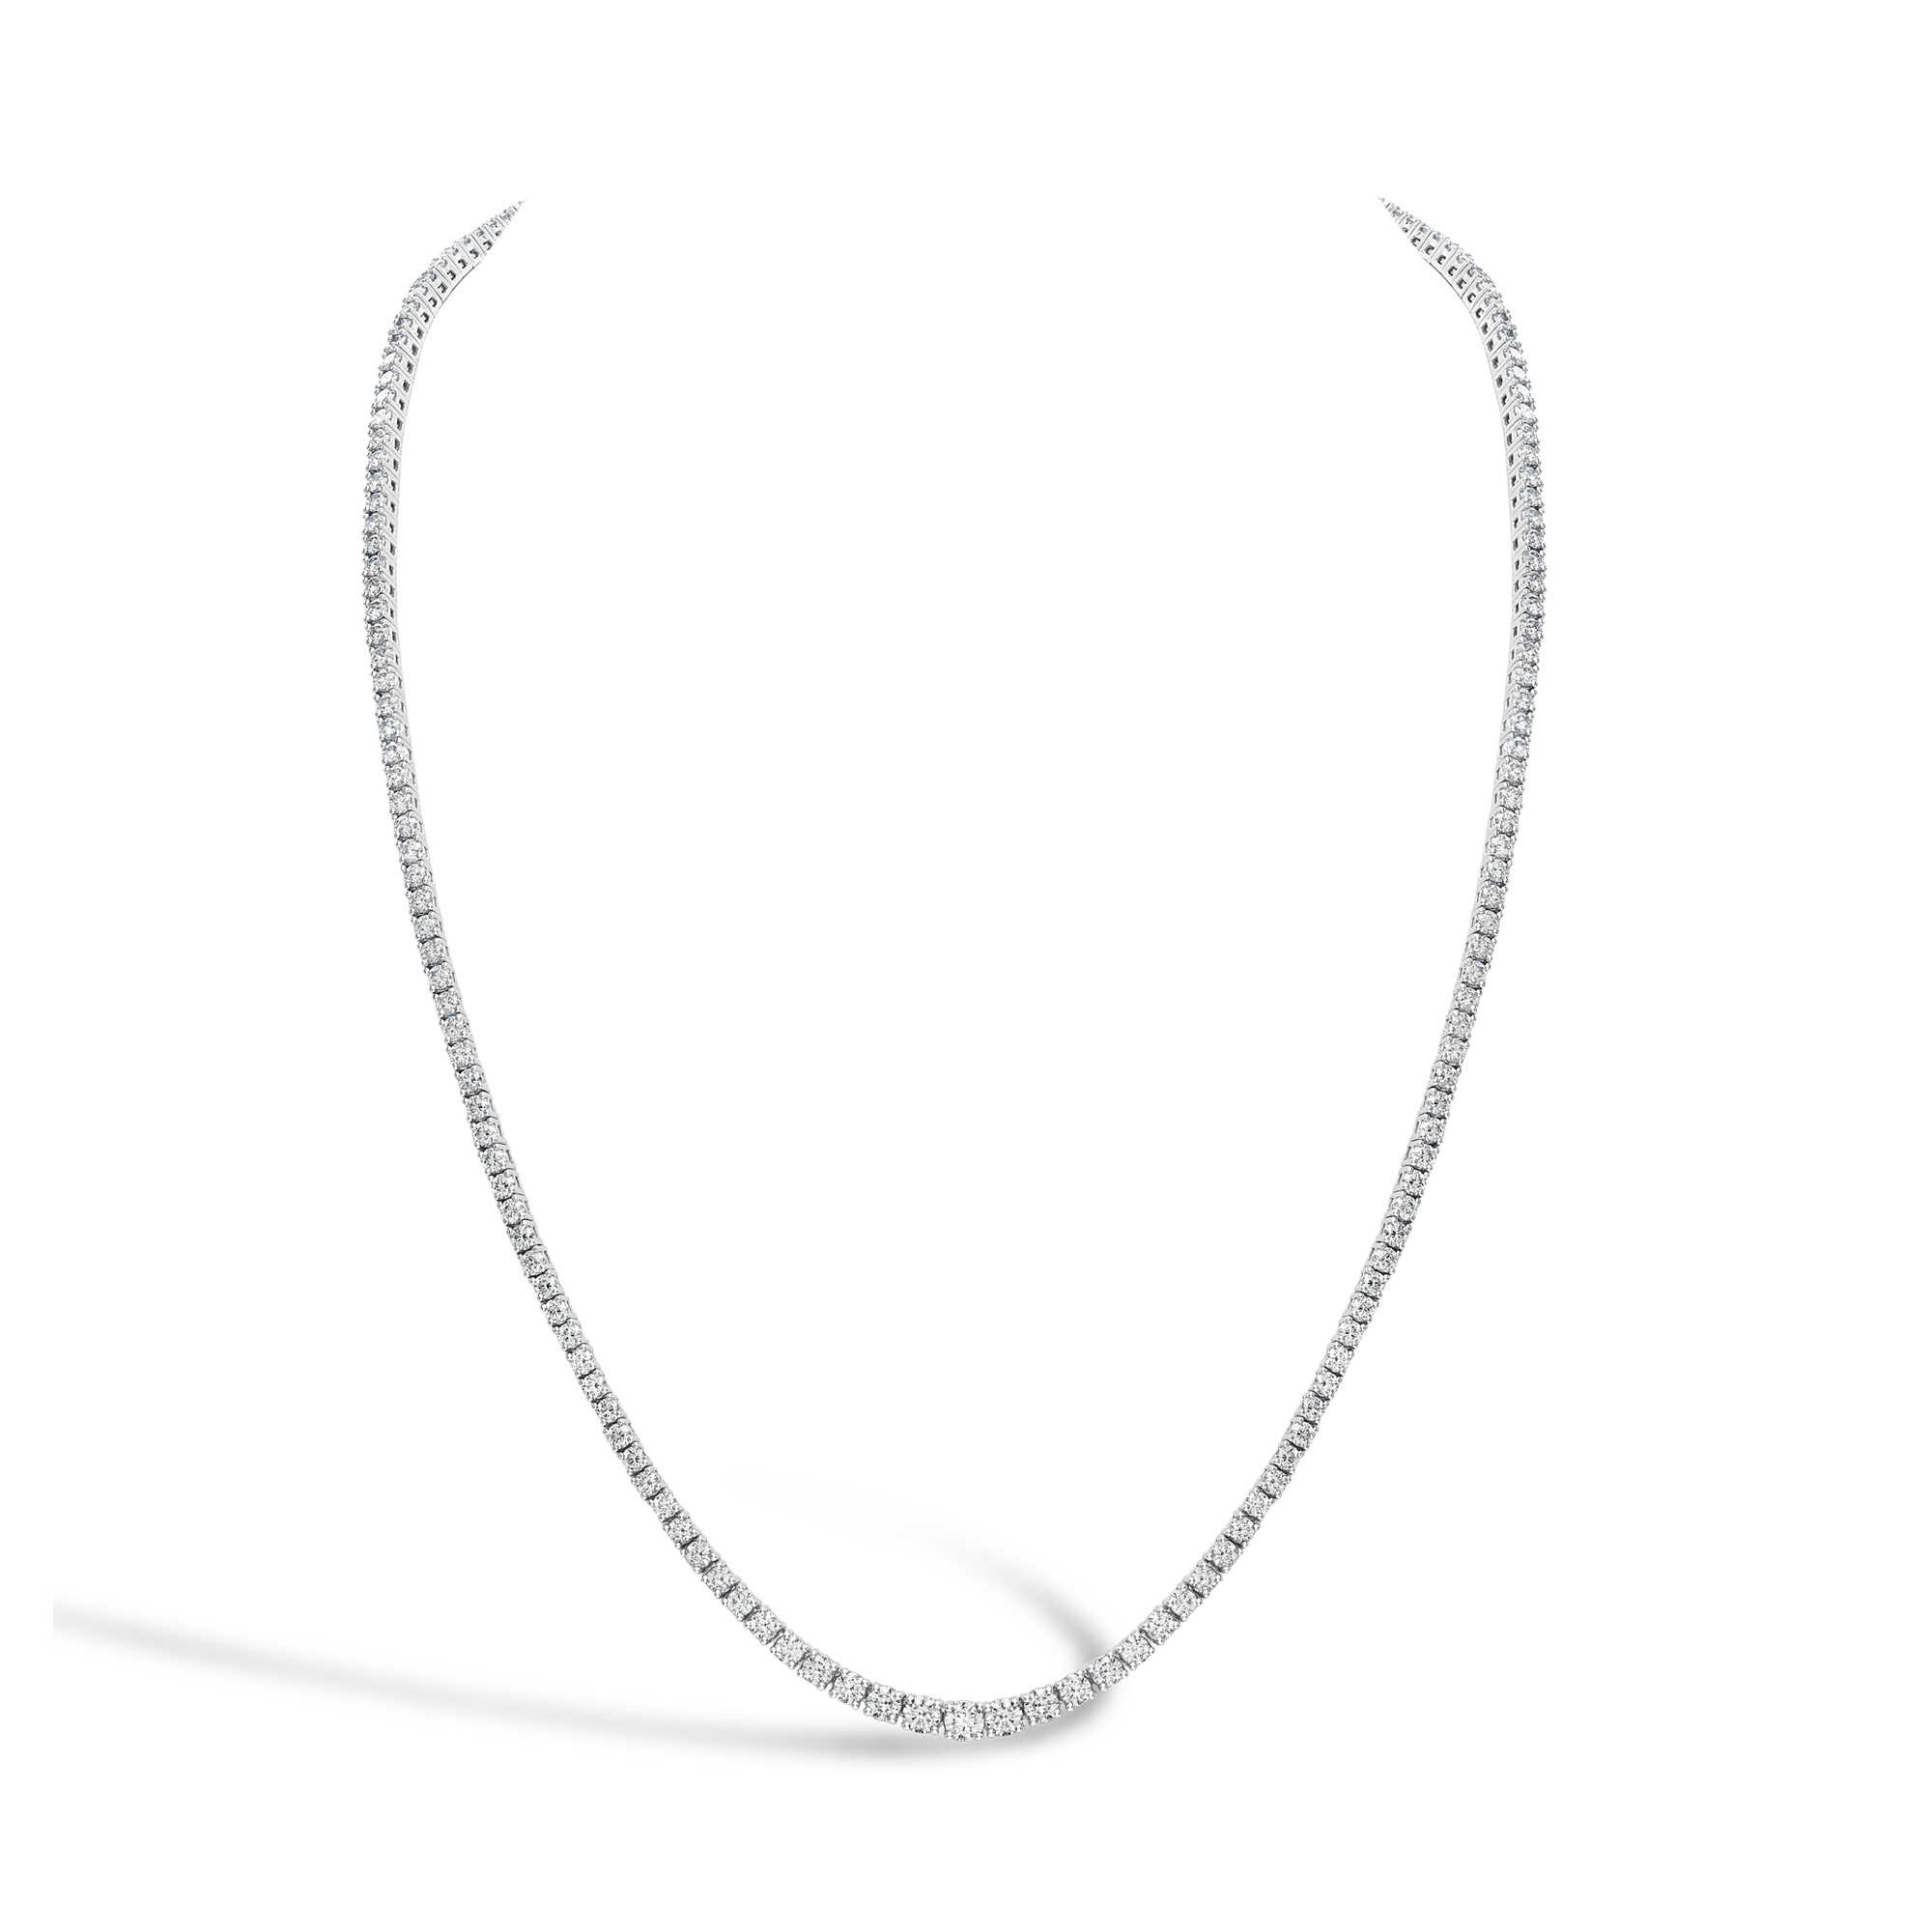 Brilliant Diamond Line Necklace Brilliant cut, Claw set_1